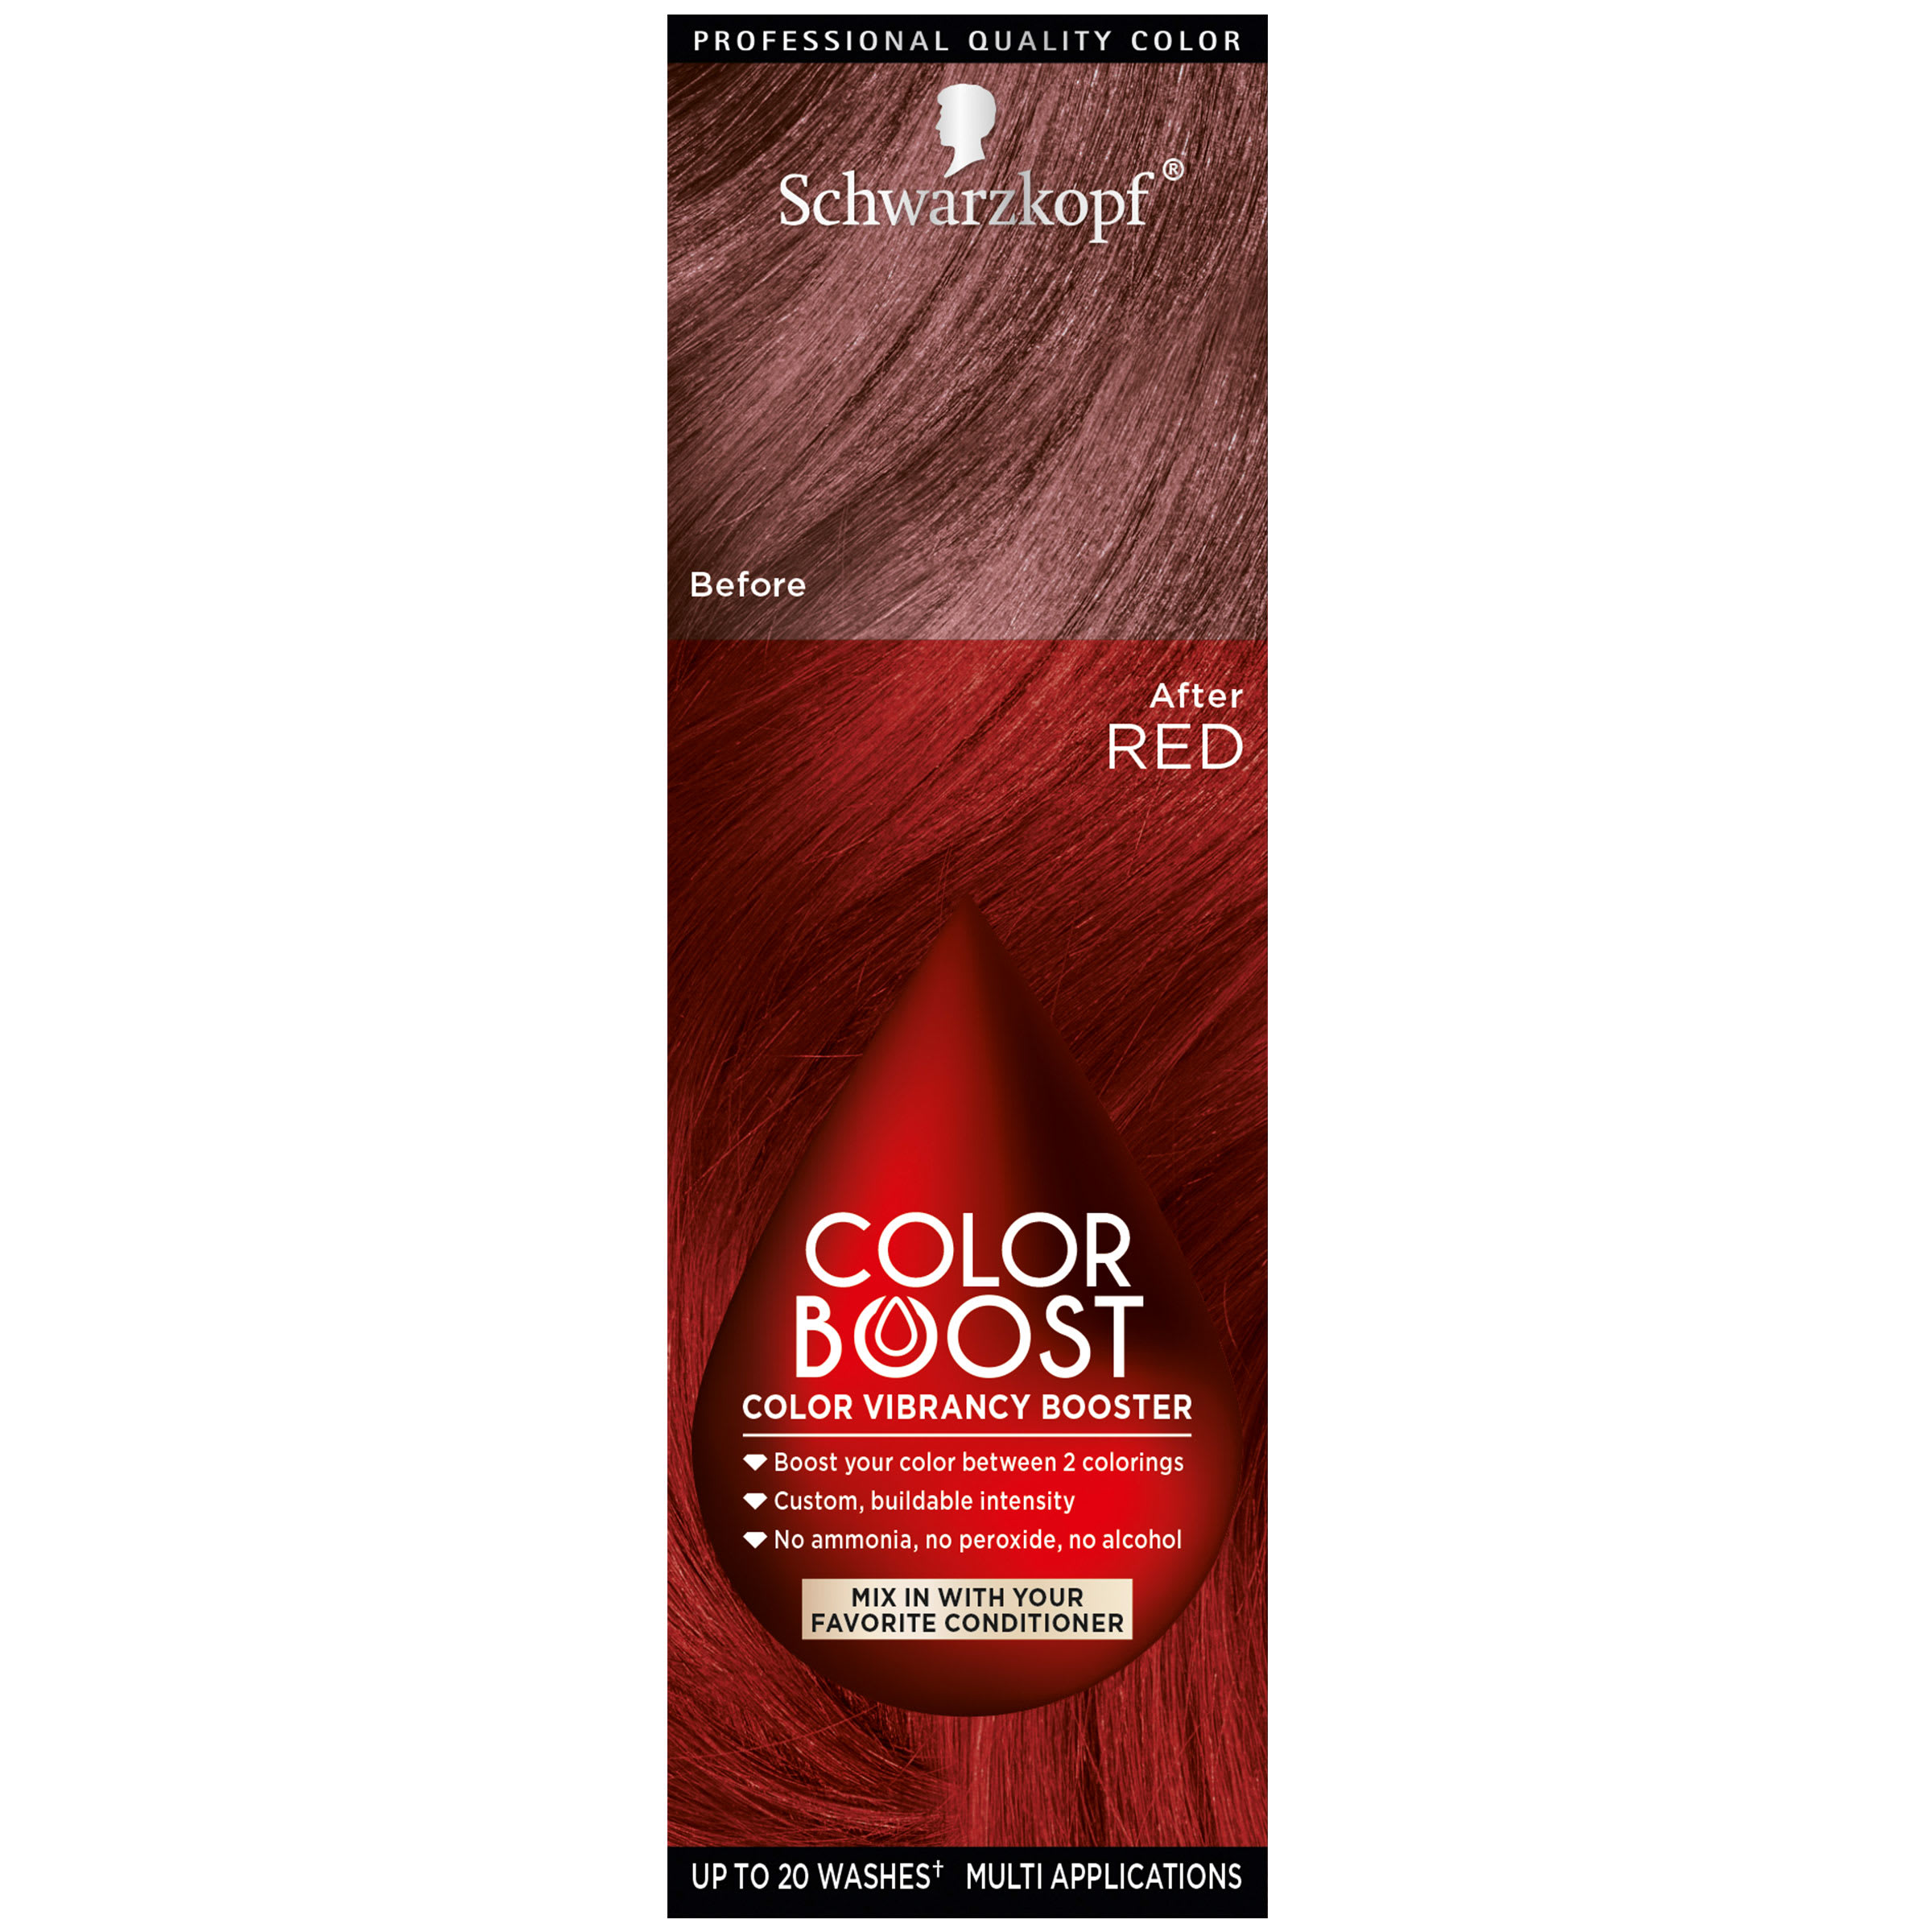 Schwarzkopf Color Boost Color Vibrancy Booster, Red, 1 fl oz - image 1 of 10